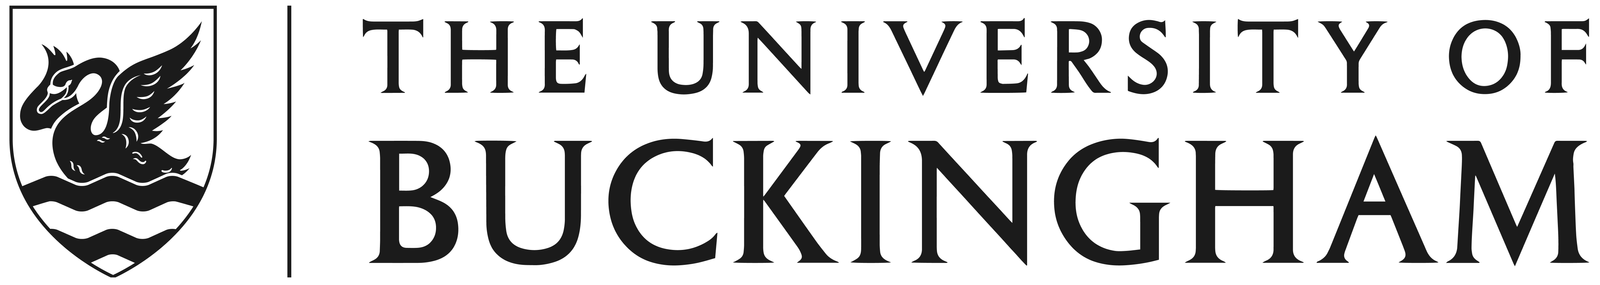 University_of_Buckingham_logo_for_wikipedia